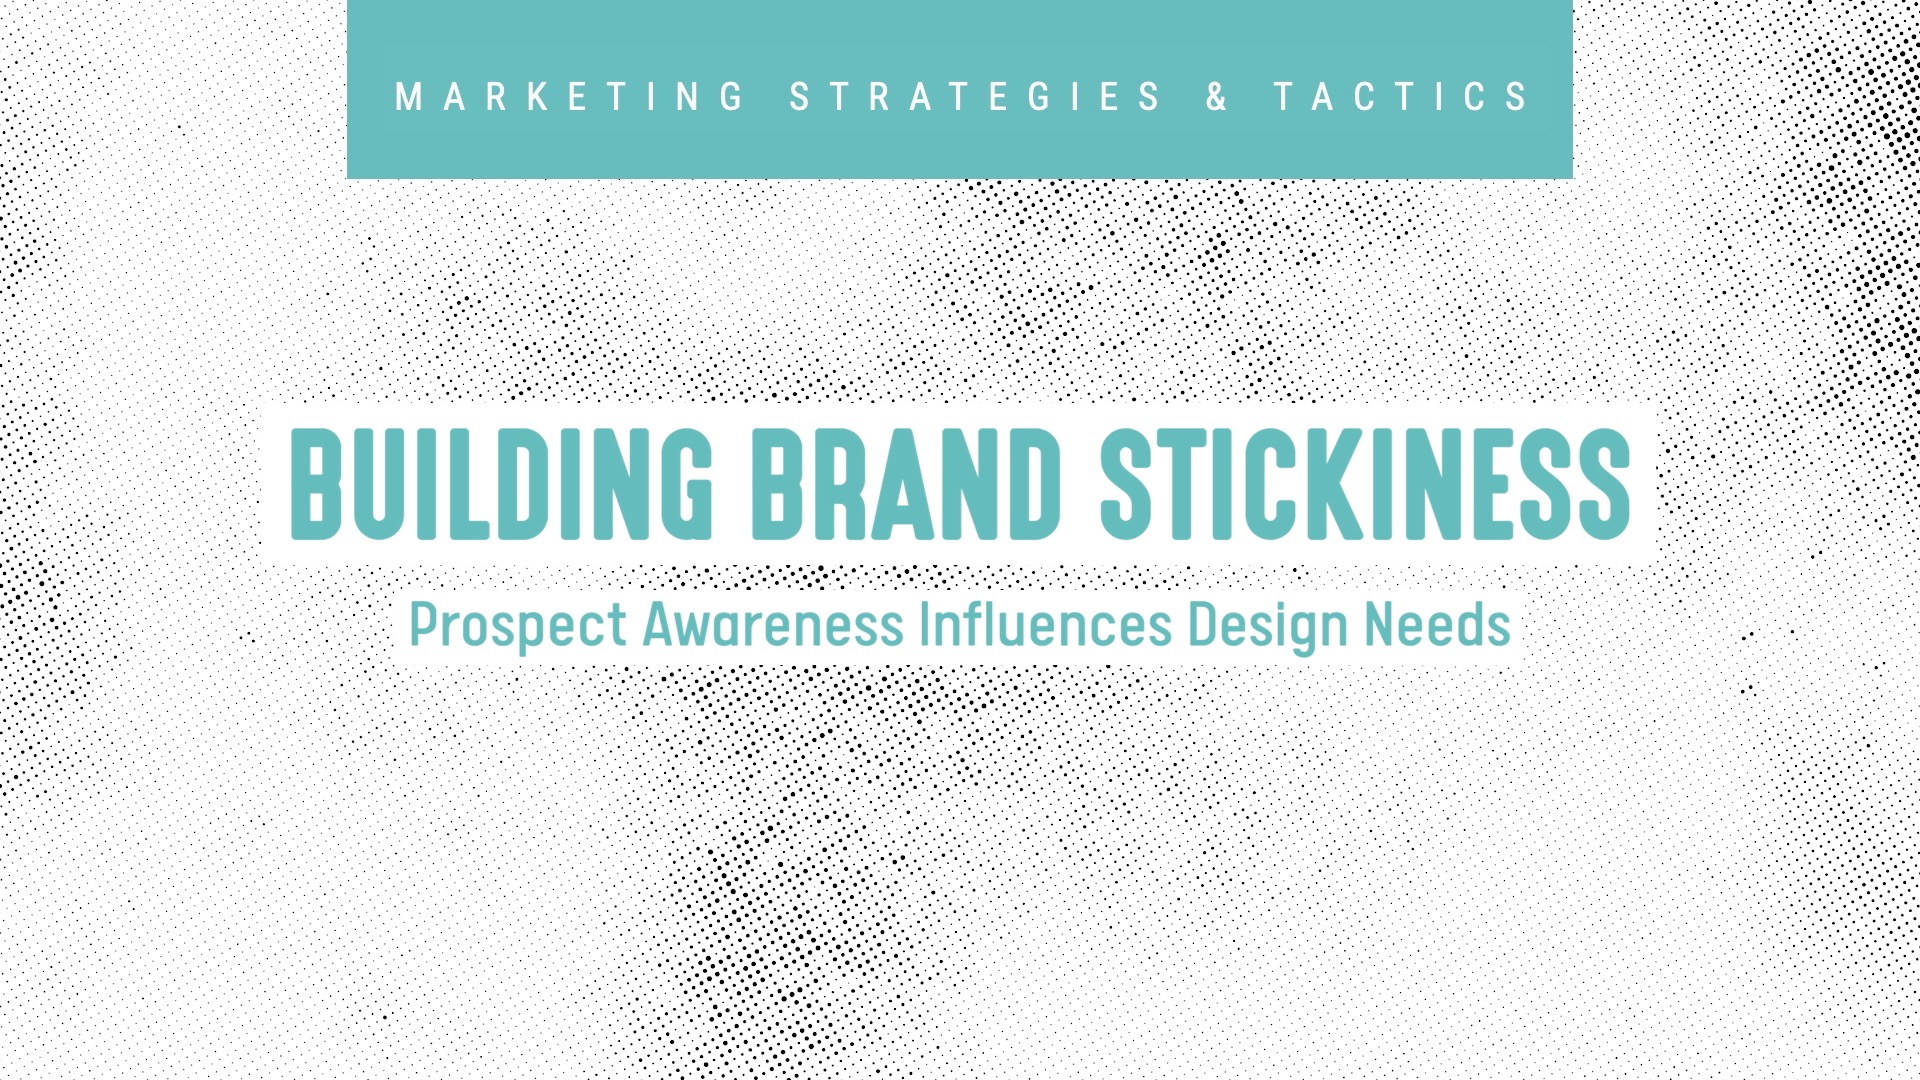 BUILDING BRAND STICKINESS: Prospect awareness determines brand creativity